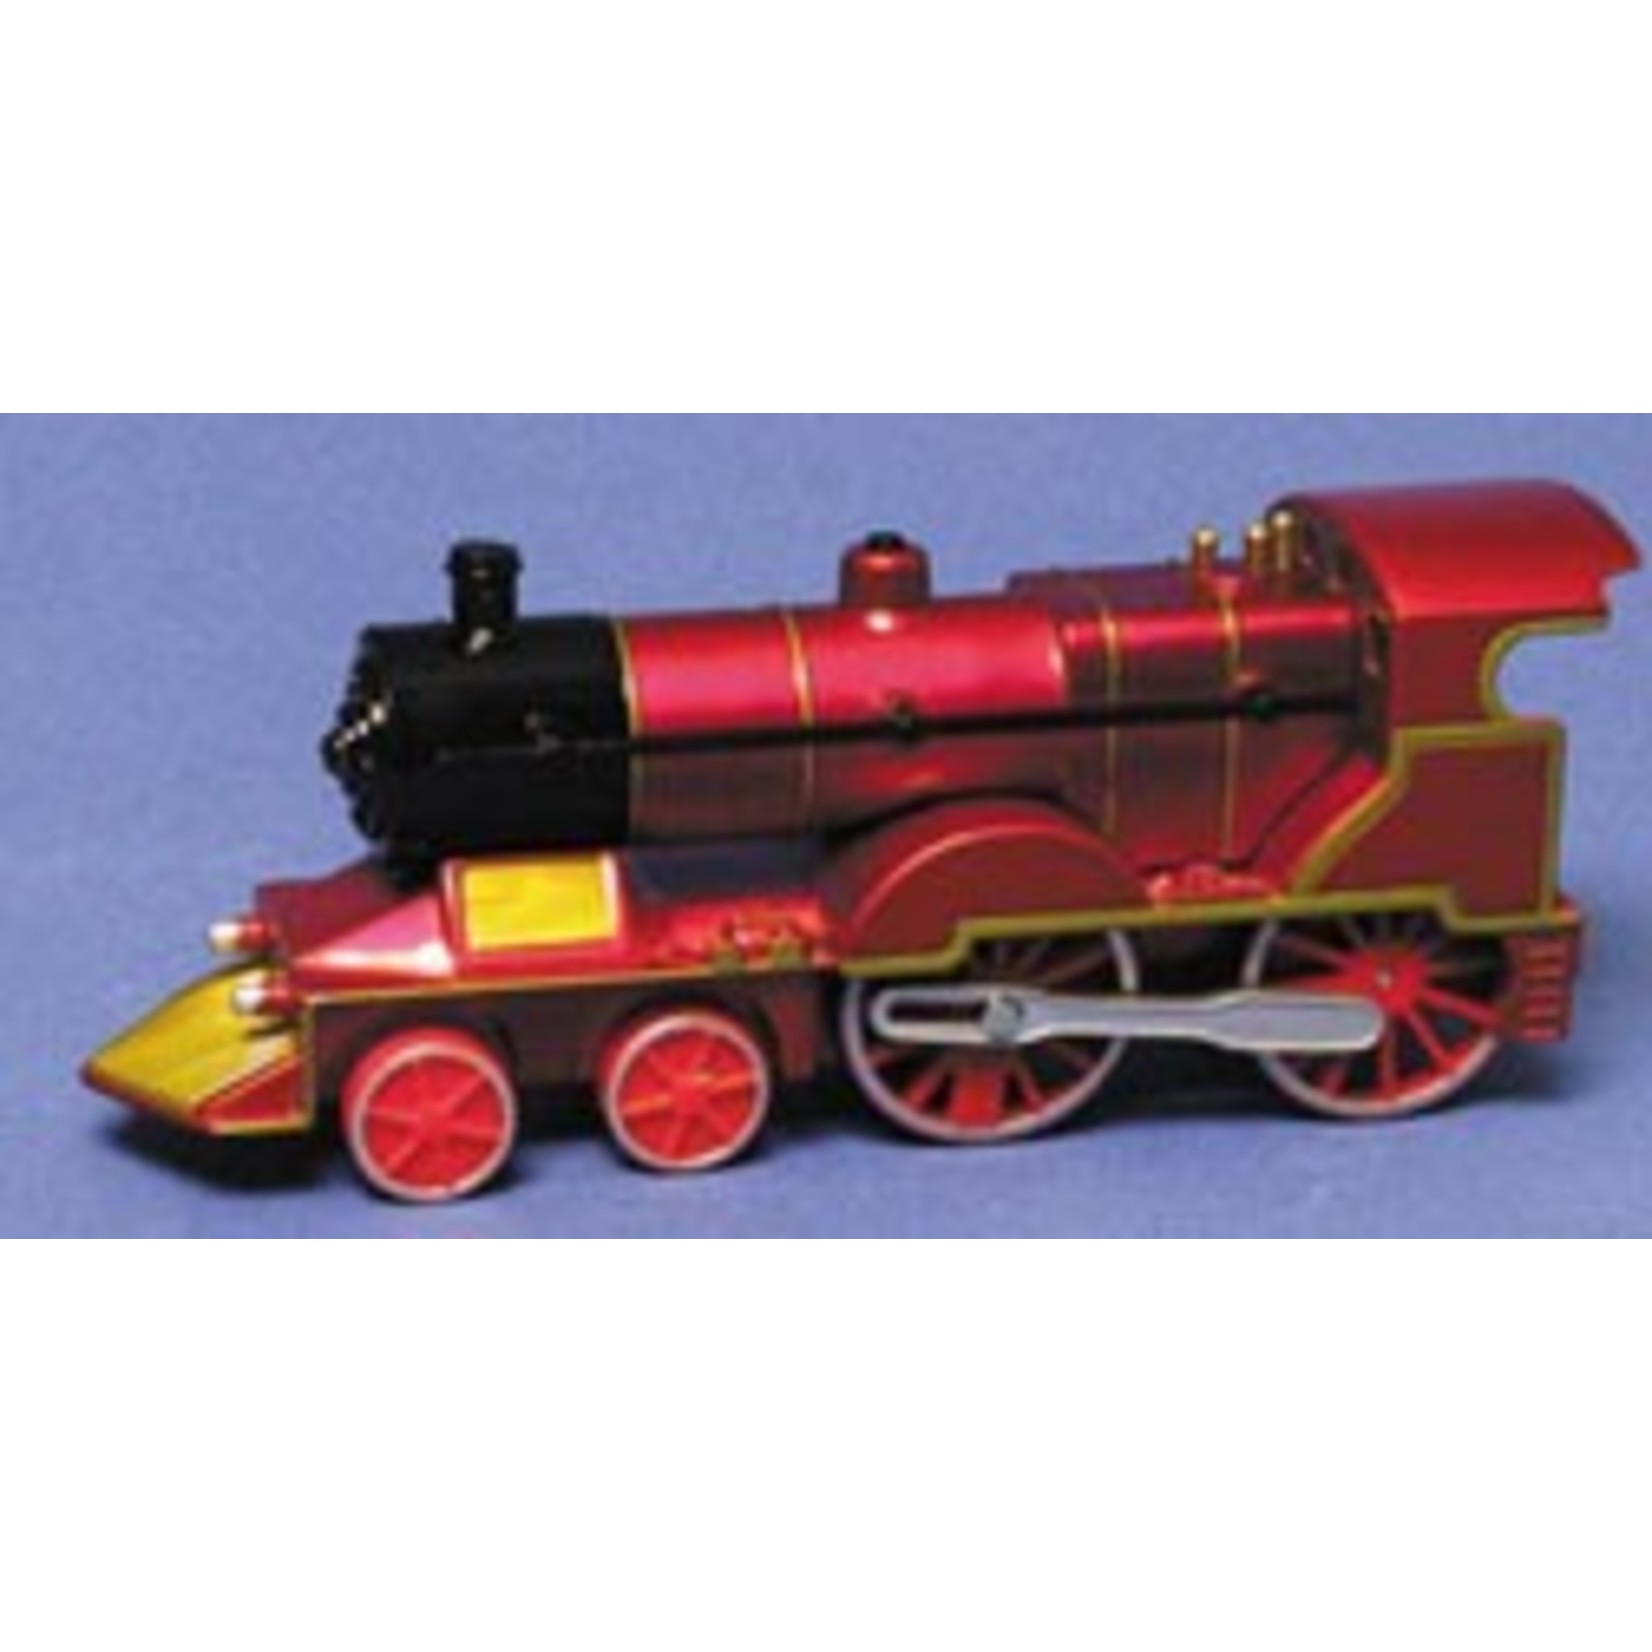 Born Rail Products Classic Train Pull Back Black, Red, Blue